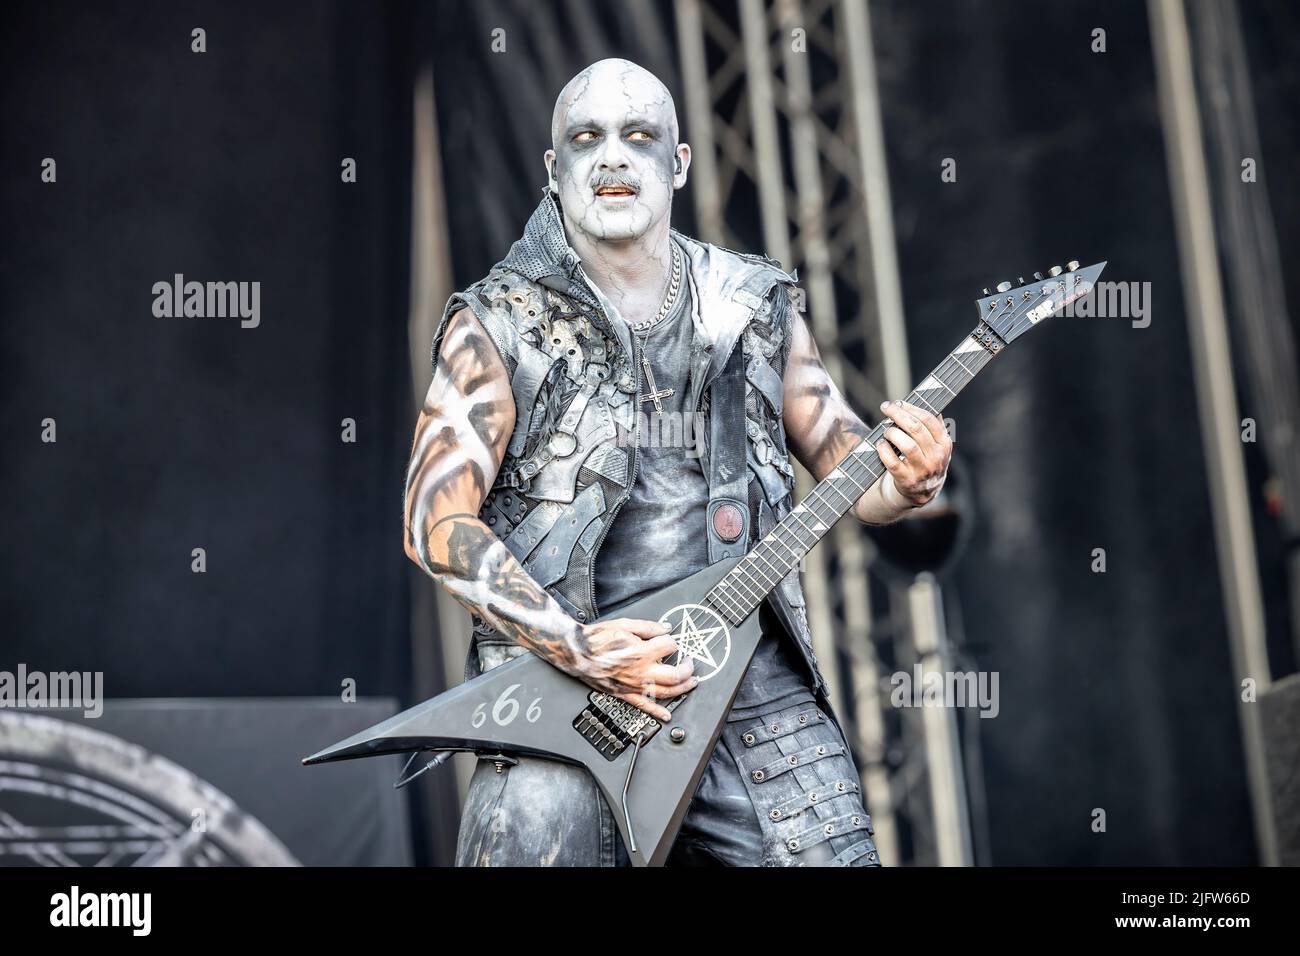 Dimmu Borgir at Tuska Metal Festival in Helsinki, Finland Editorial Stock  Photo - Image of tuska, shagrath: 178174198